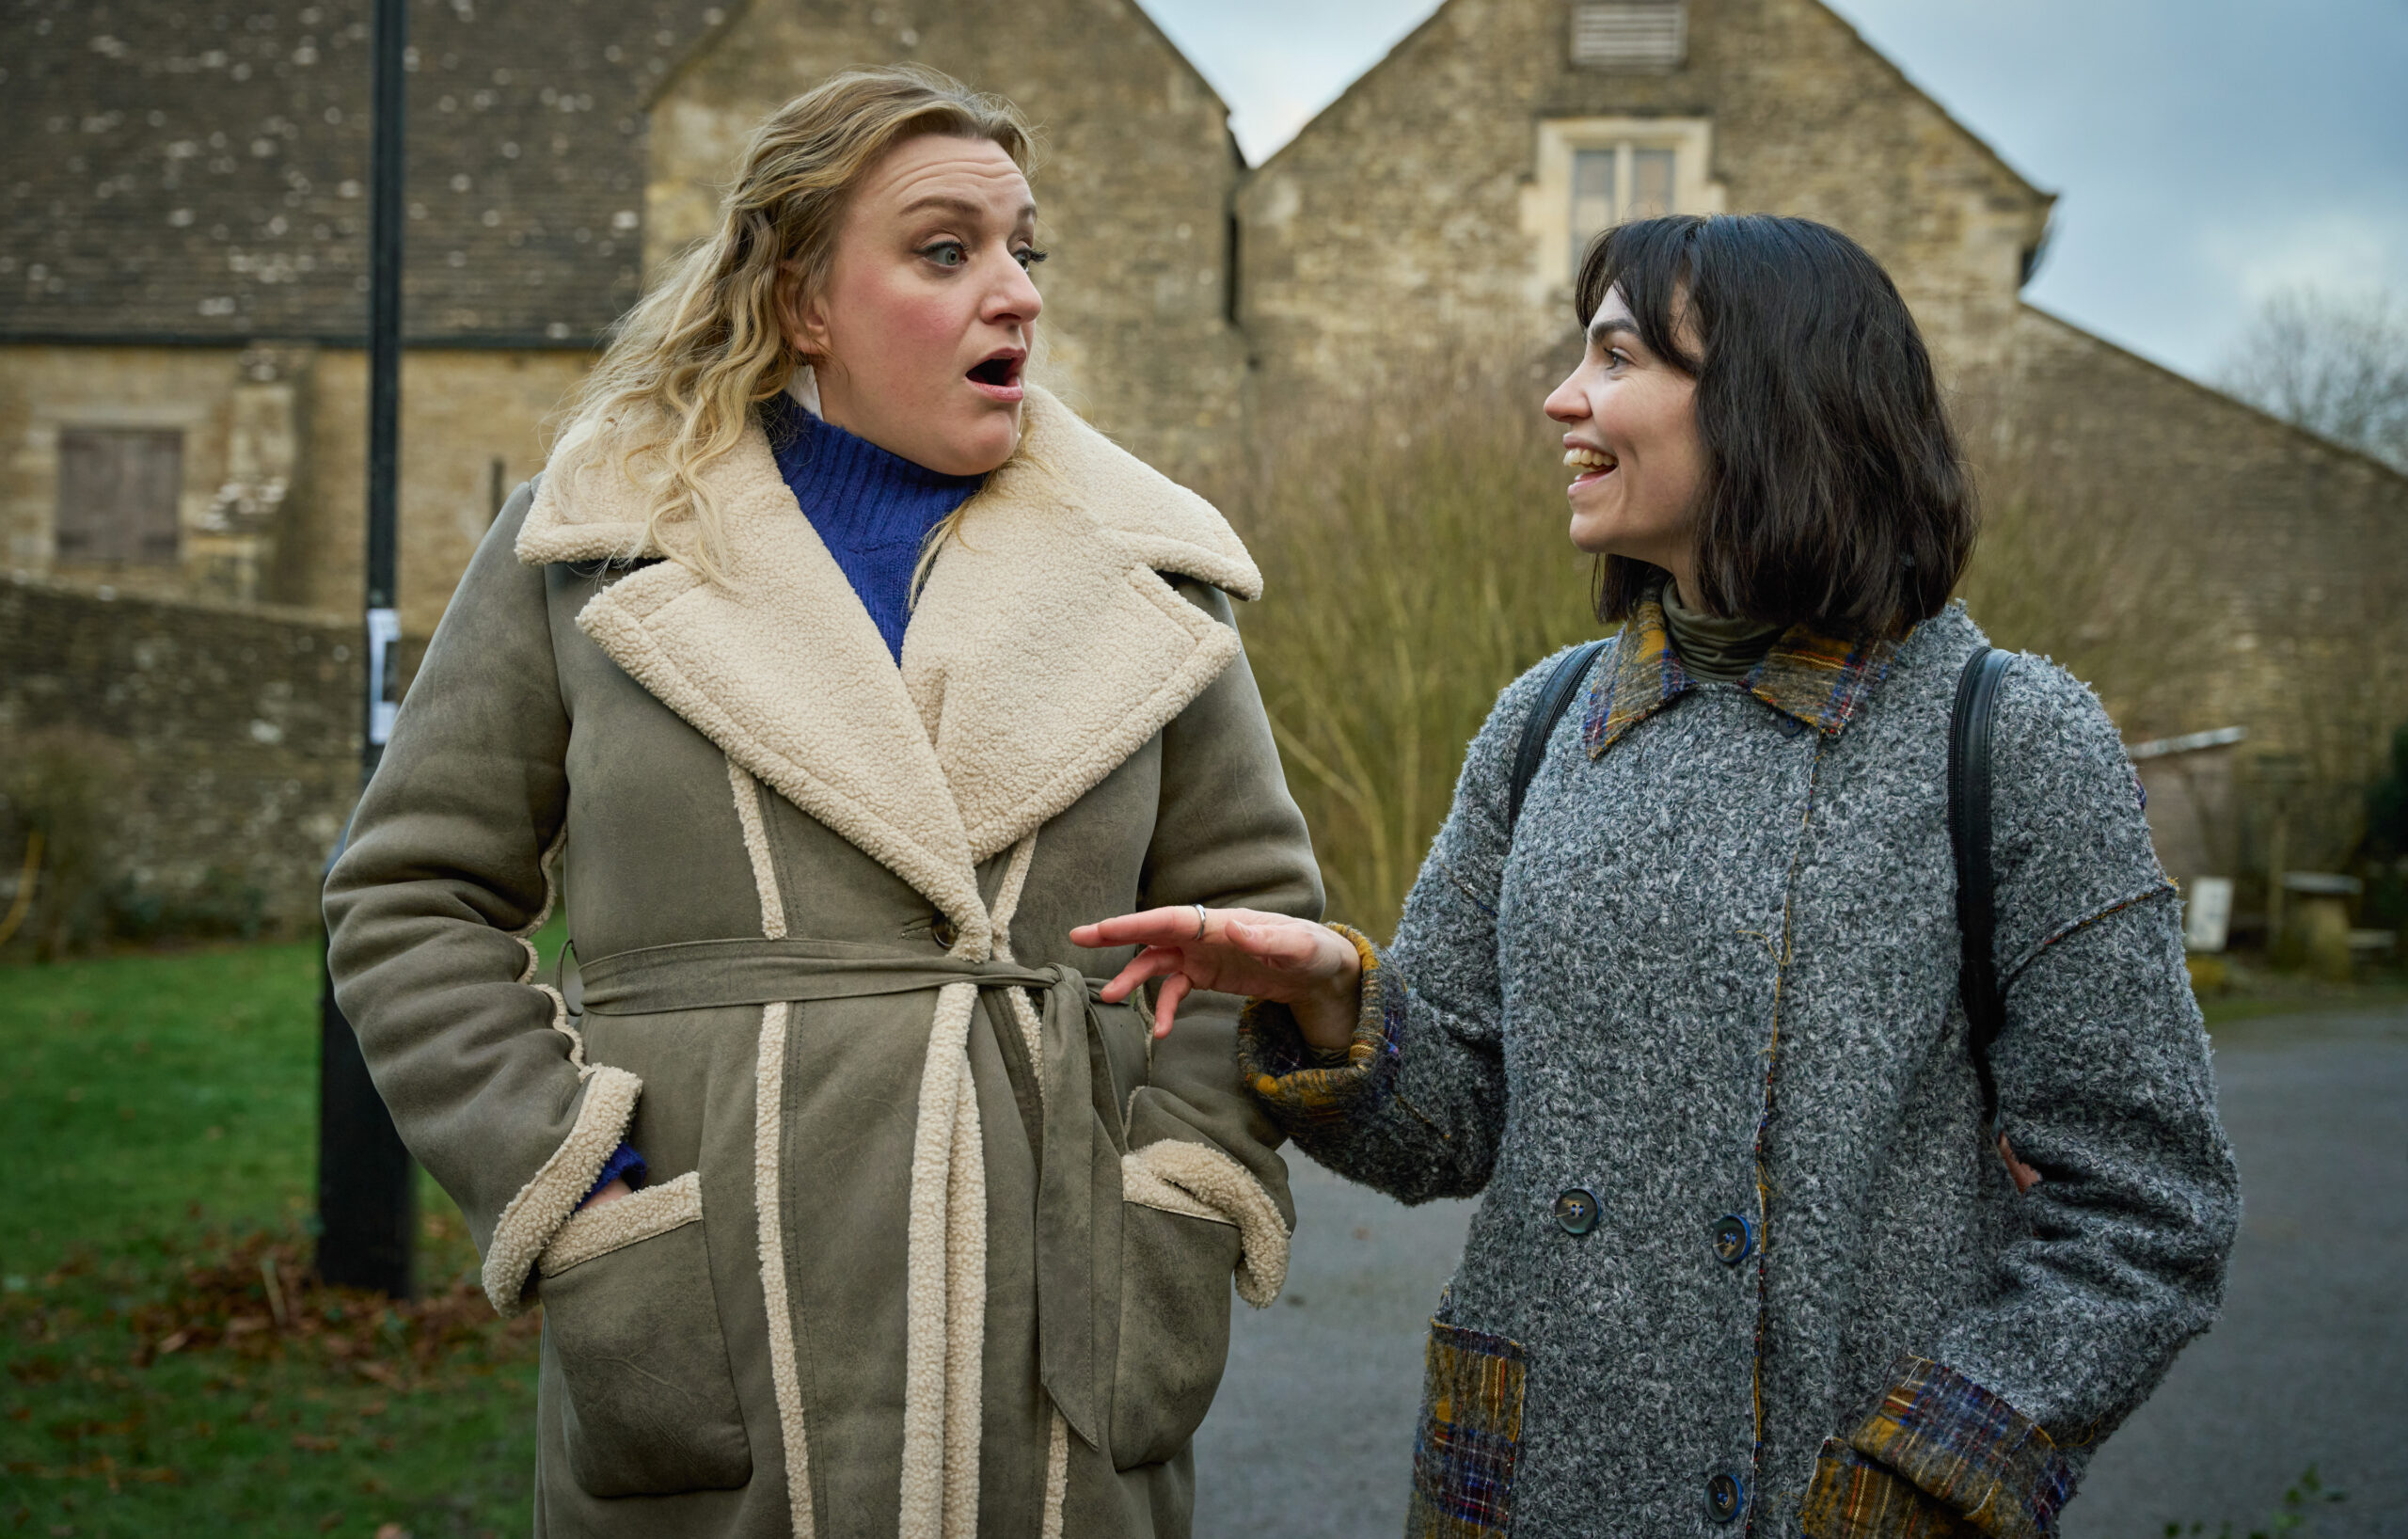 Hulu’s Am I Being Unreasonable? | Daisy May Cooper and Selin Hizli on British Dark Comedy Series